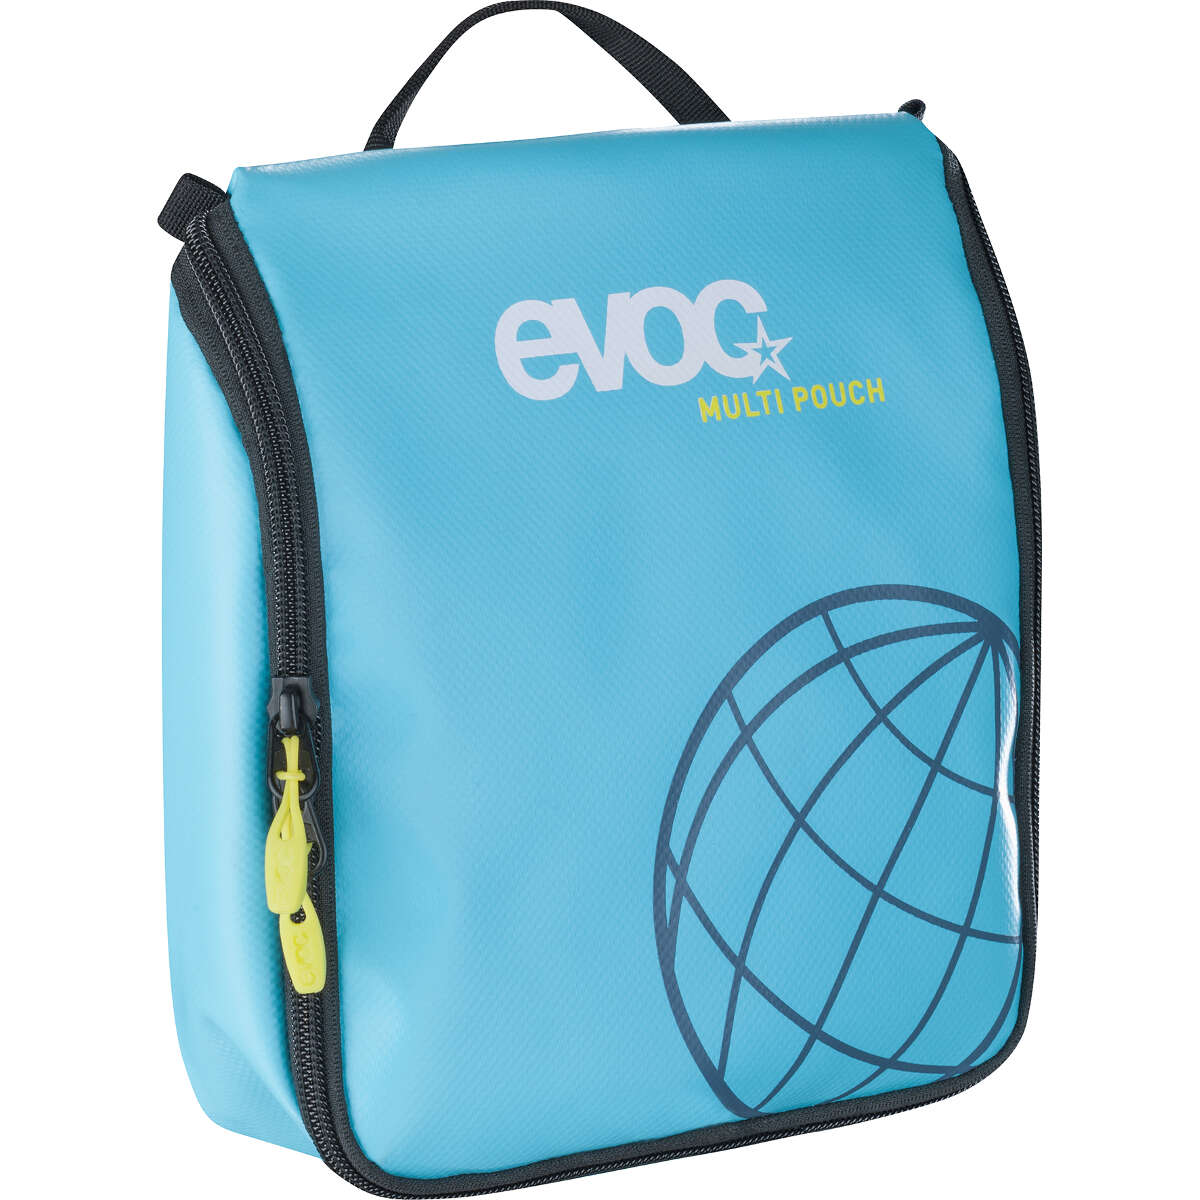 Evoc Tool Bag Multi Pouch Neon Blue